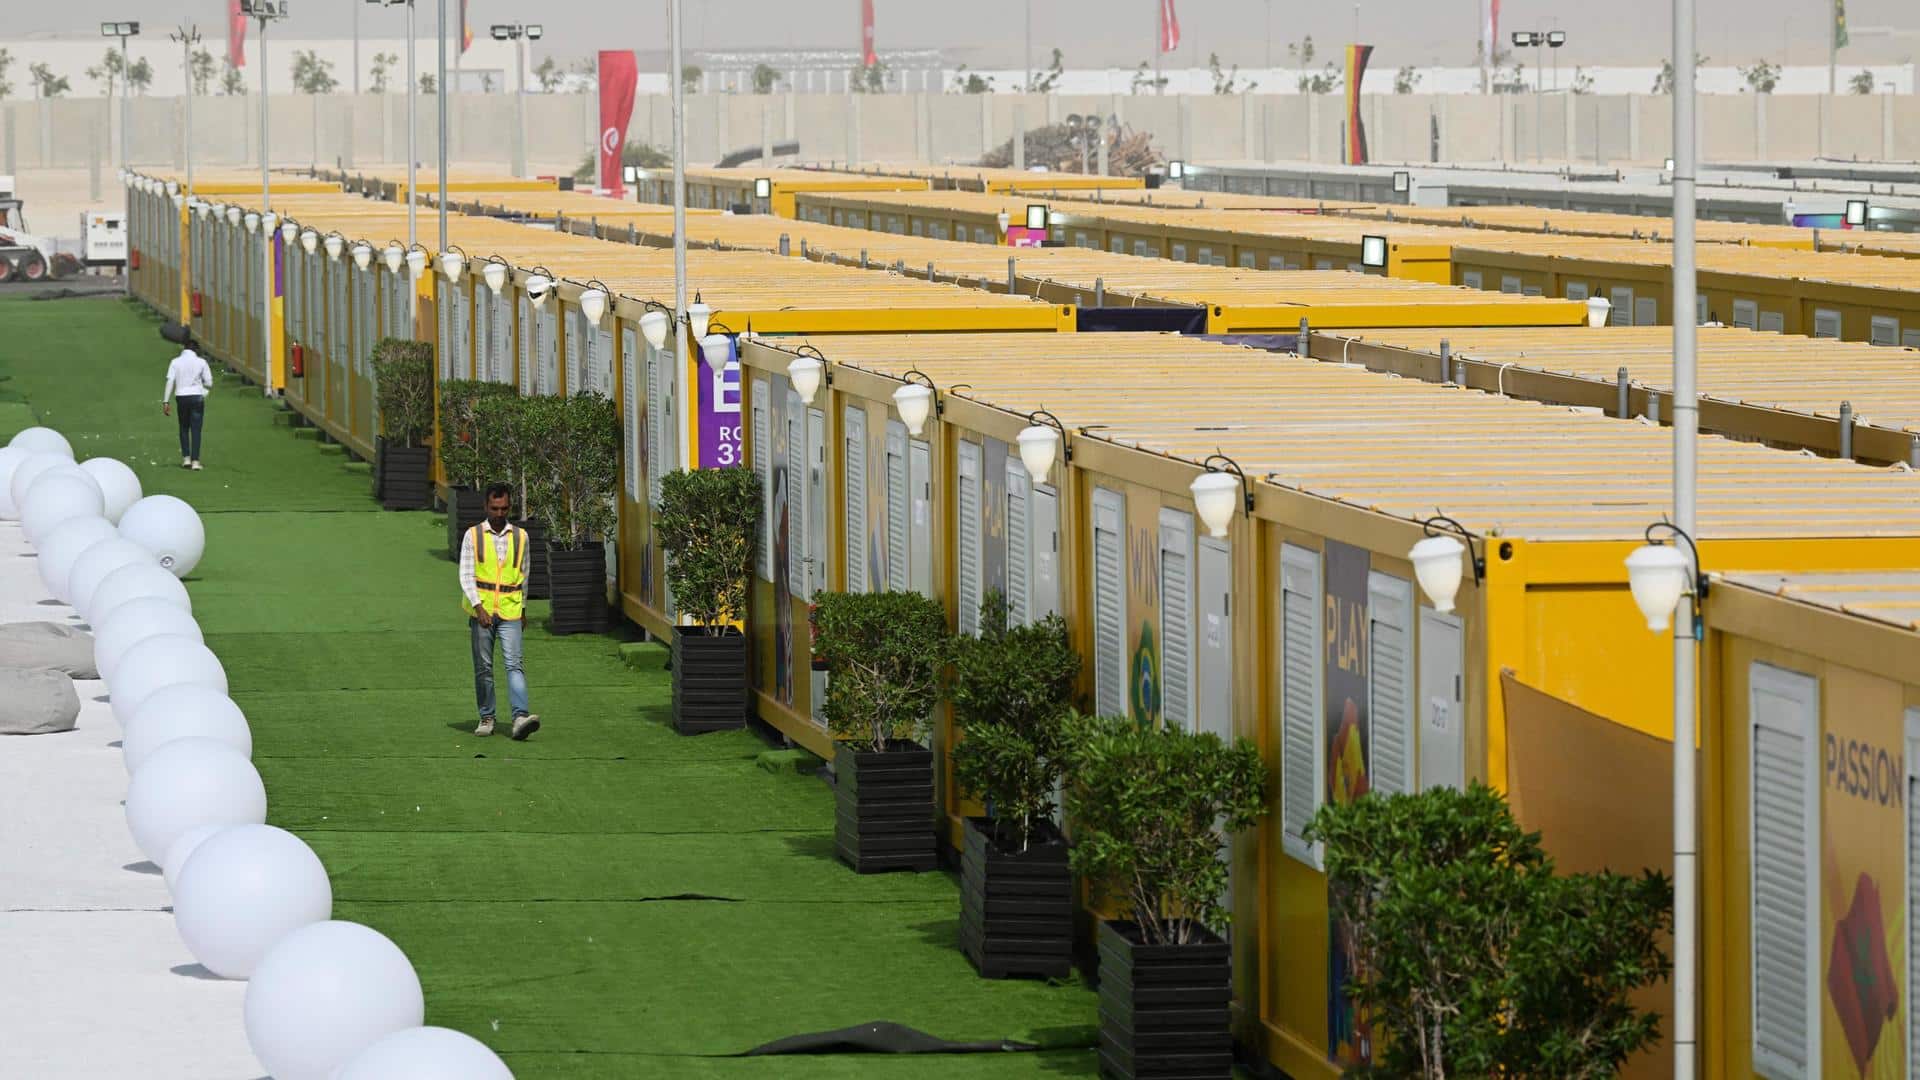 FIFA World Cup 2022: Qatar unveils 6,000 cabin fan village